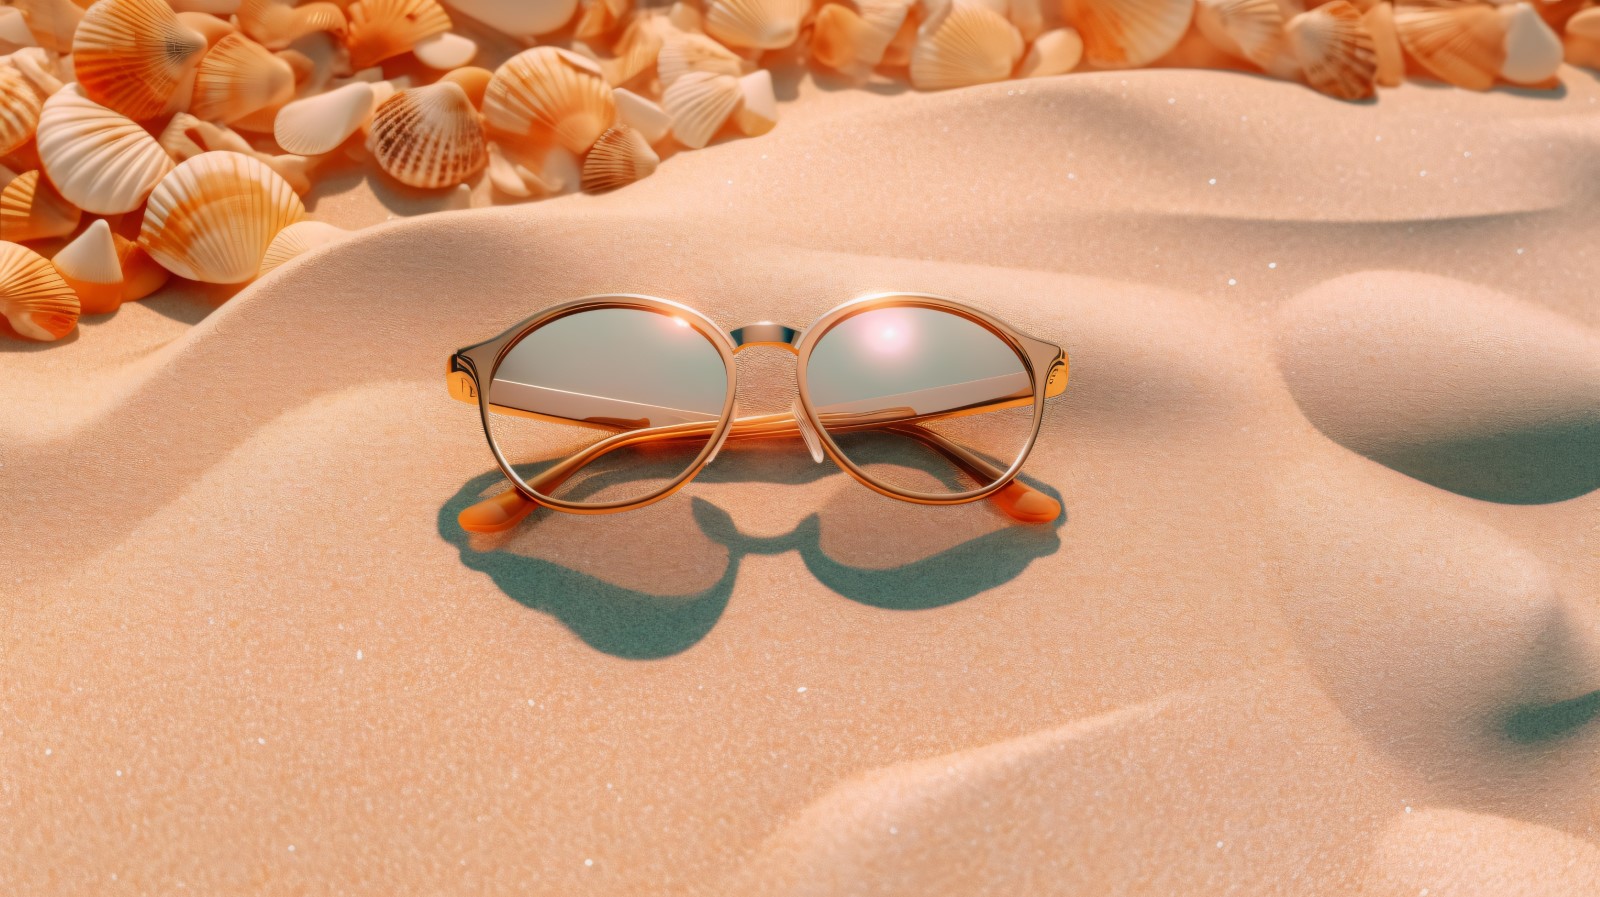 Sunglasses seashells and beach accessories on sandy beach 197